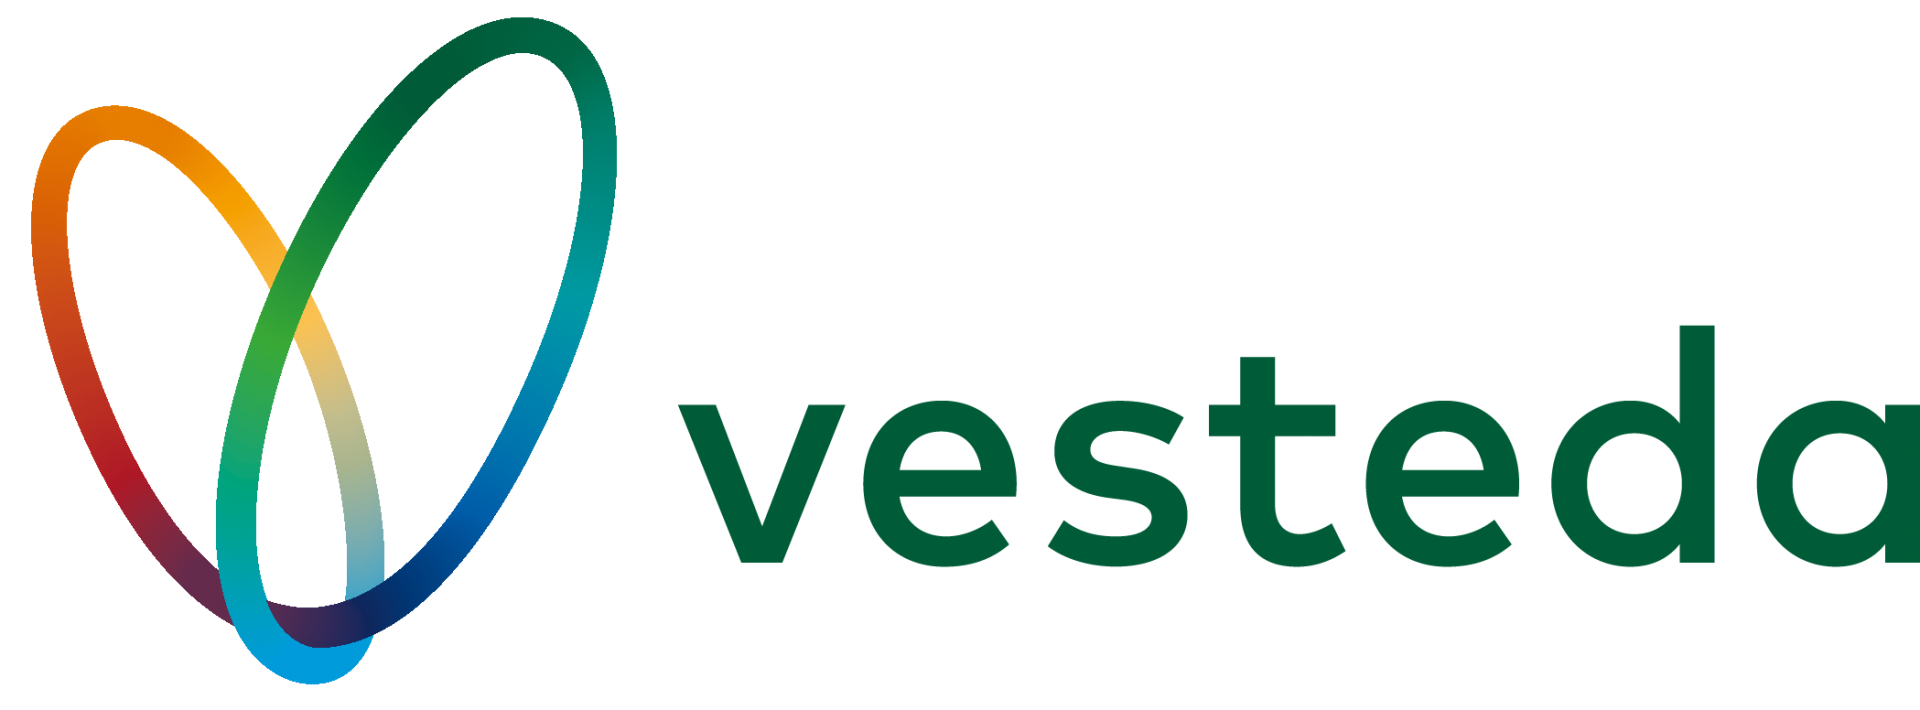 1920_vesteda-logo-rgb